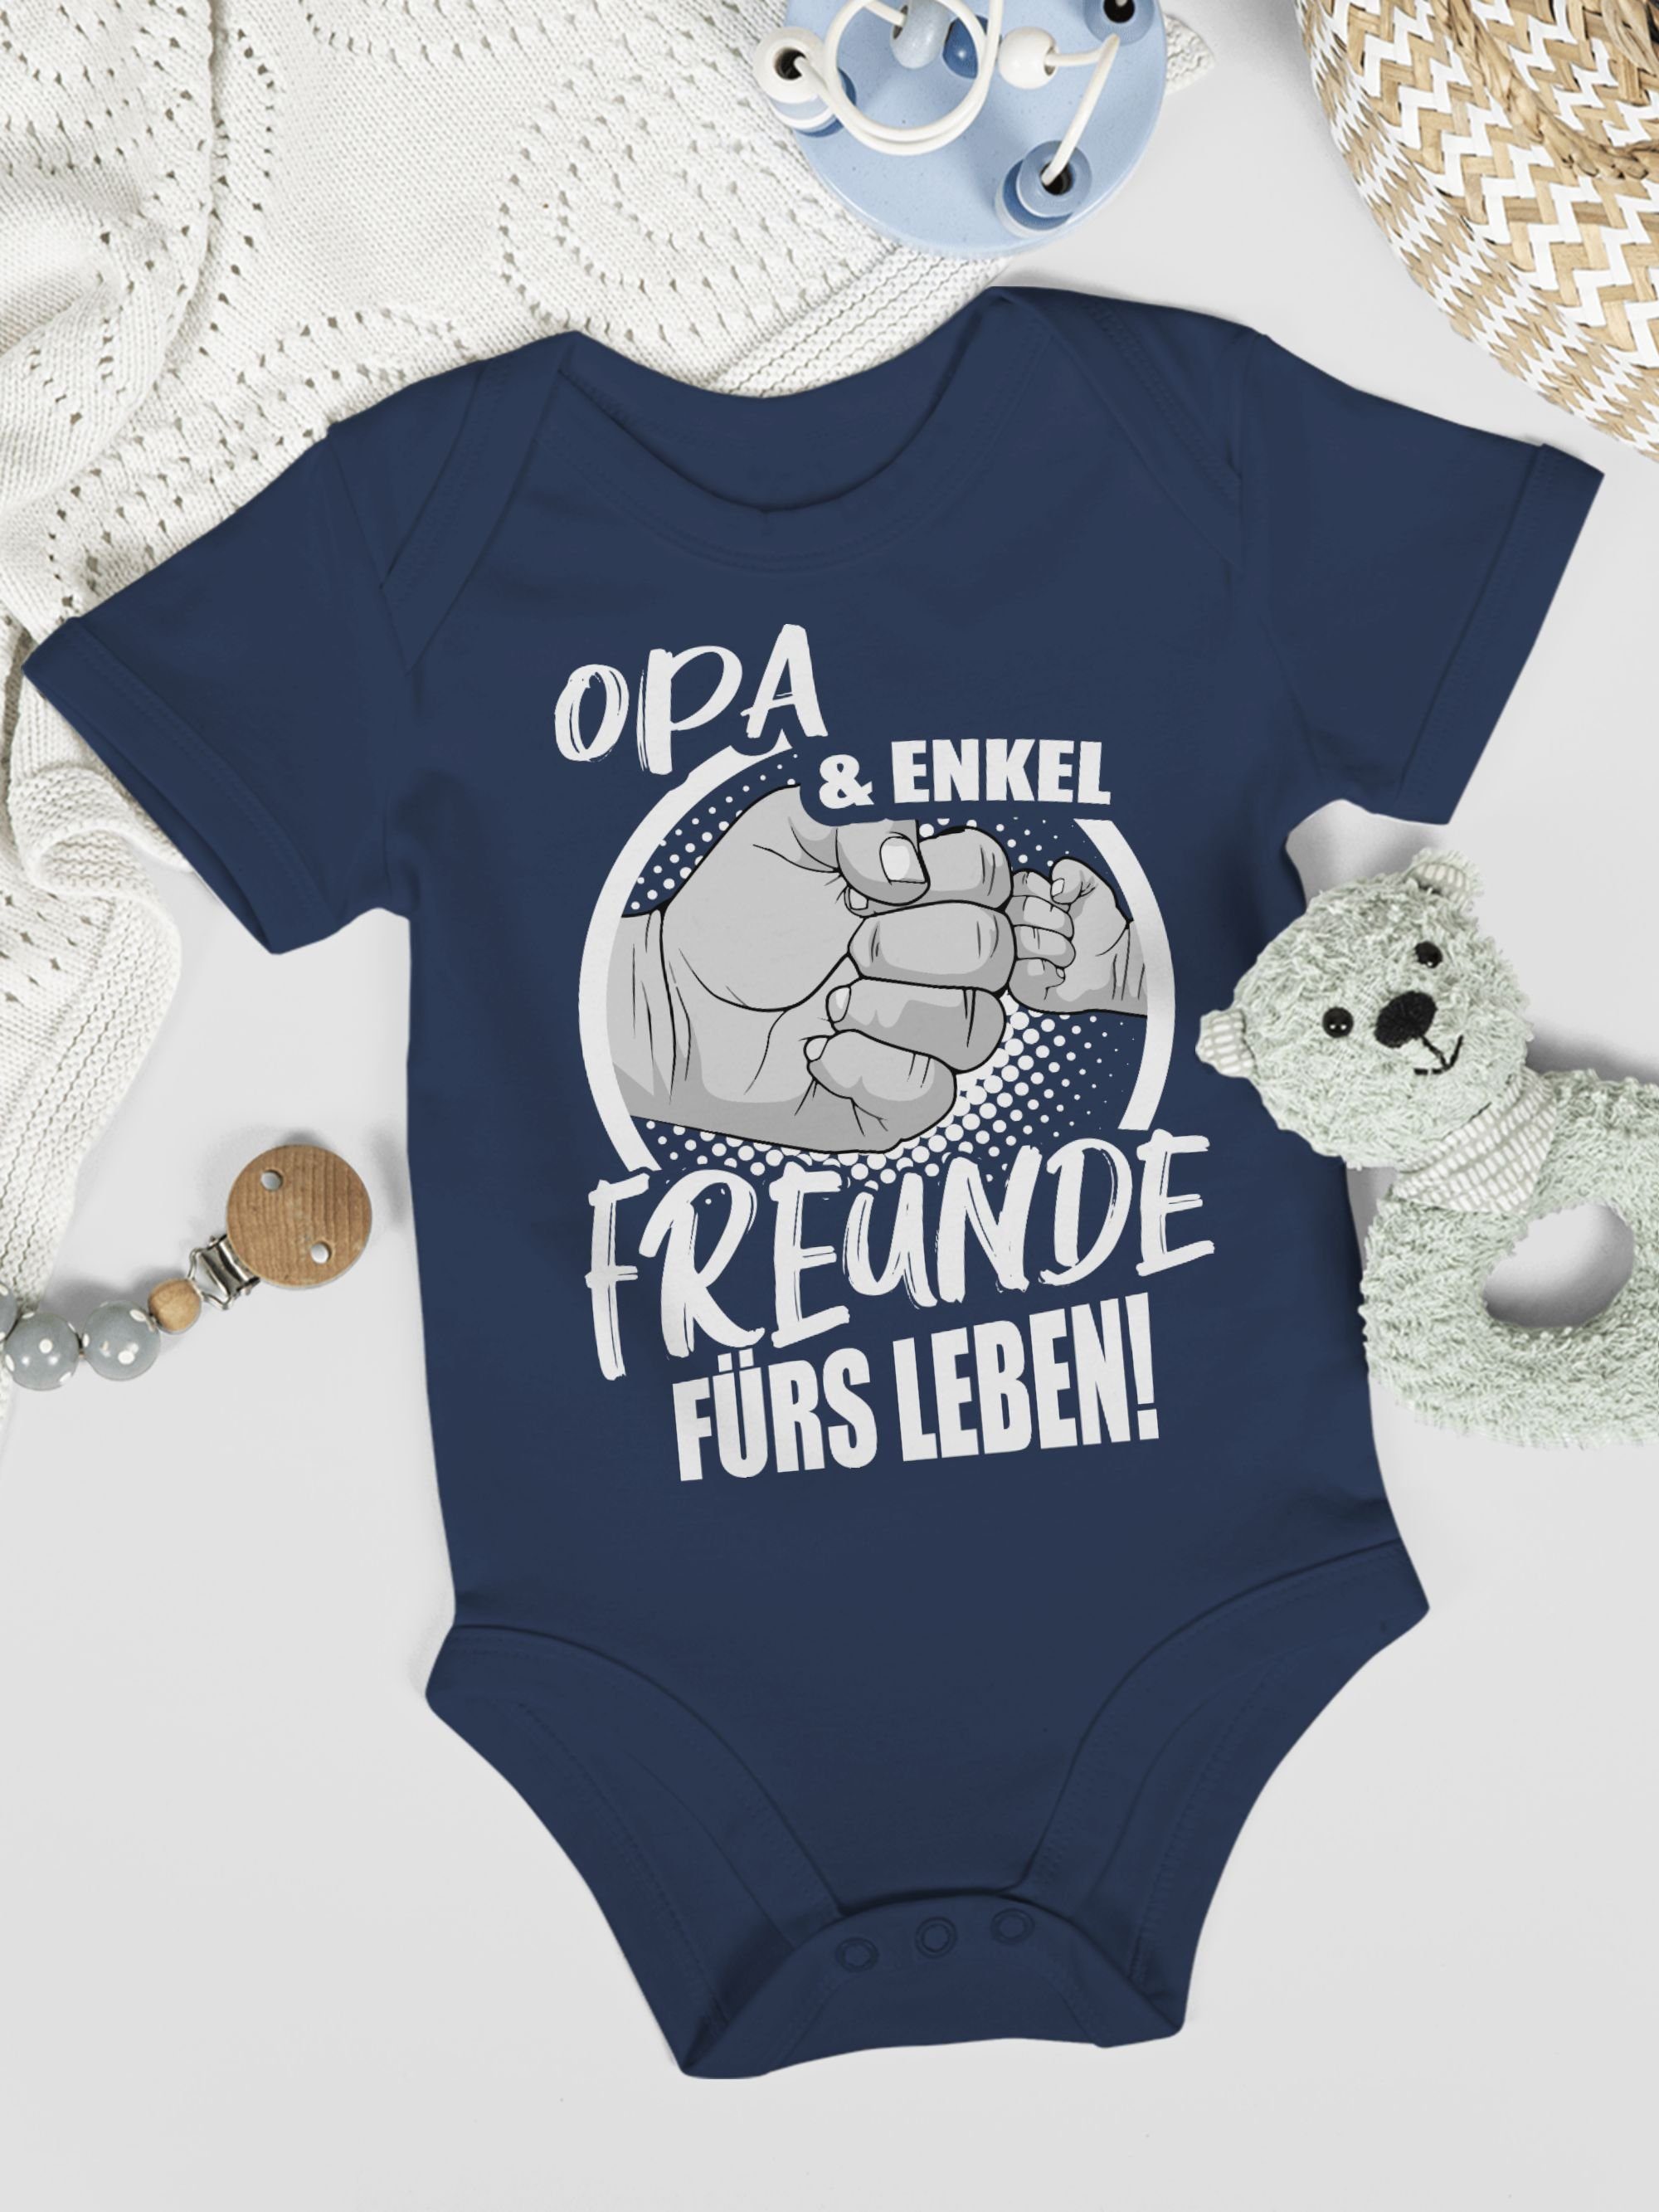 Freunde 2 Baby Navy Enkel Leben! Shirtracer Familie Partner-Look Opa & Blau fürs Shirtbody